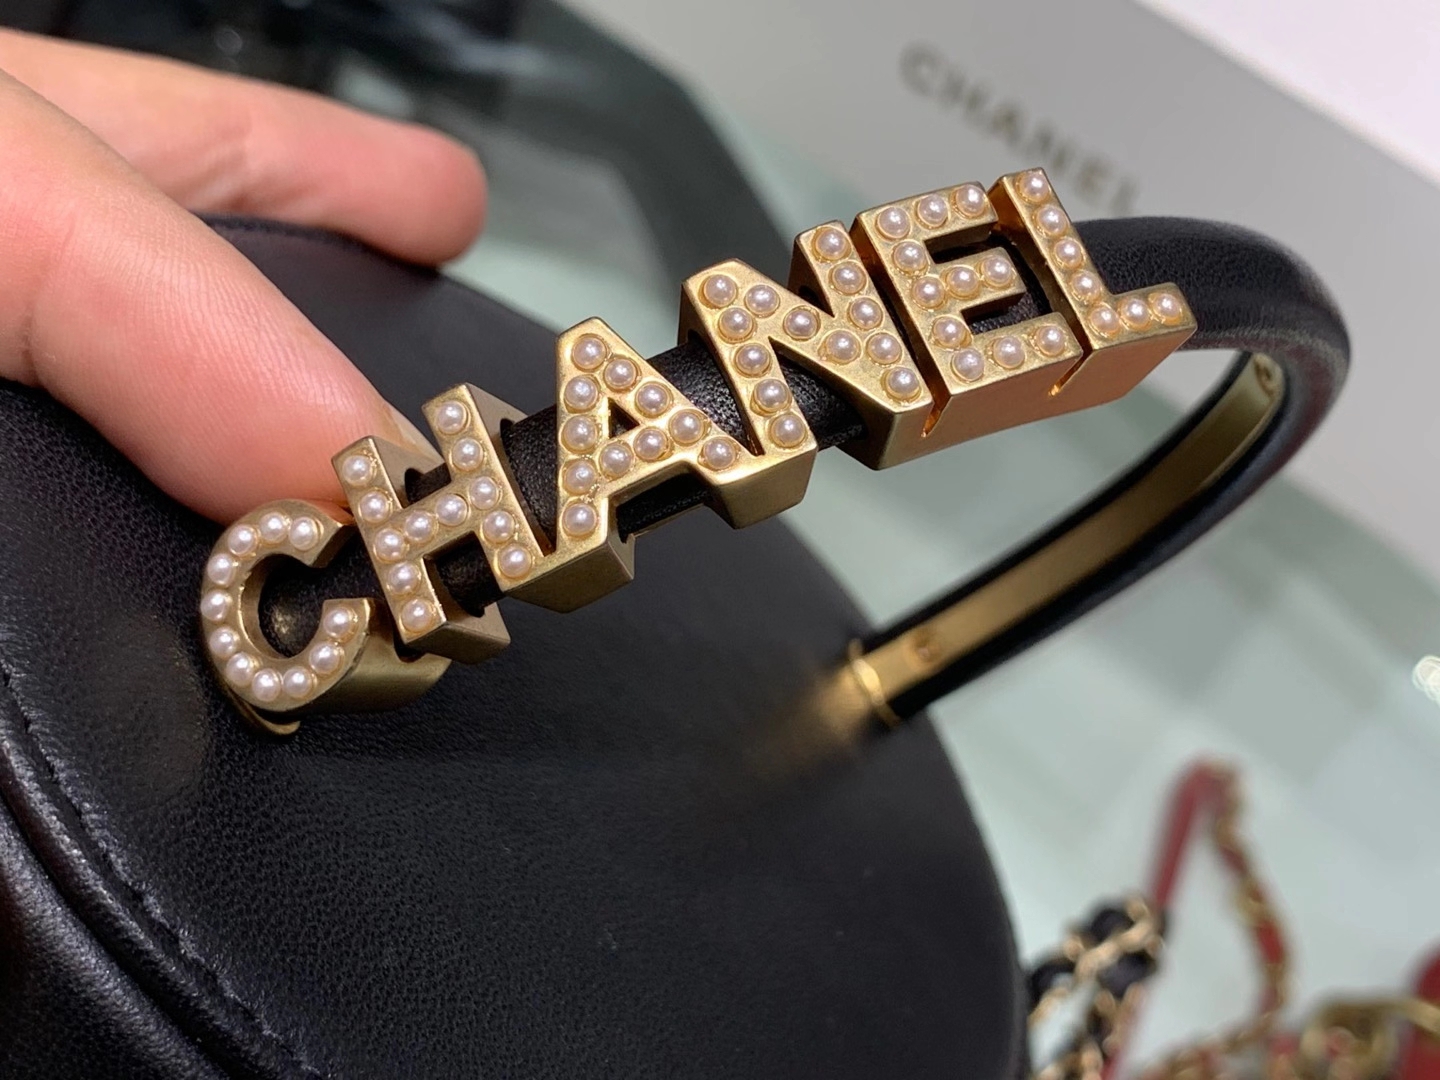 Chanel（香奈儿）2020 珍珠化妆桶包 黑色 复古五金相配的小珍珠搭配 精致 典雅 复古